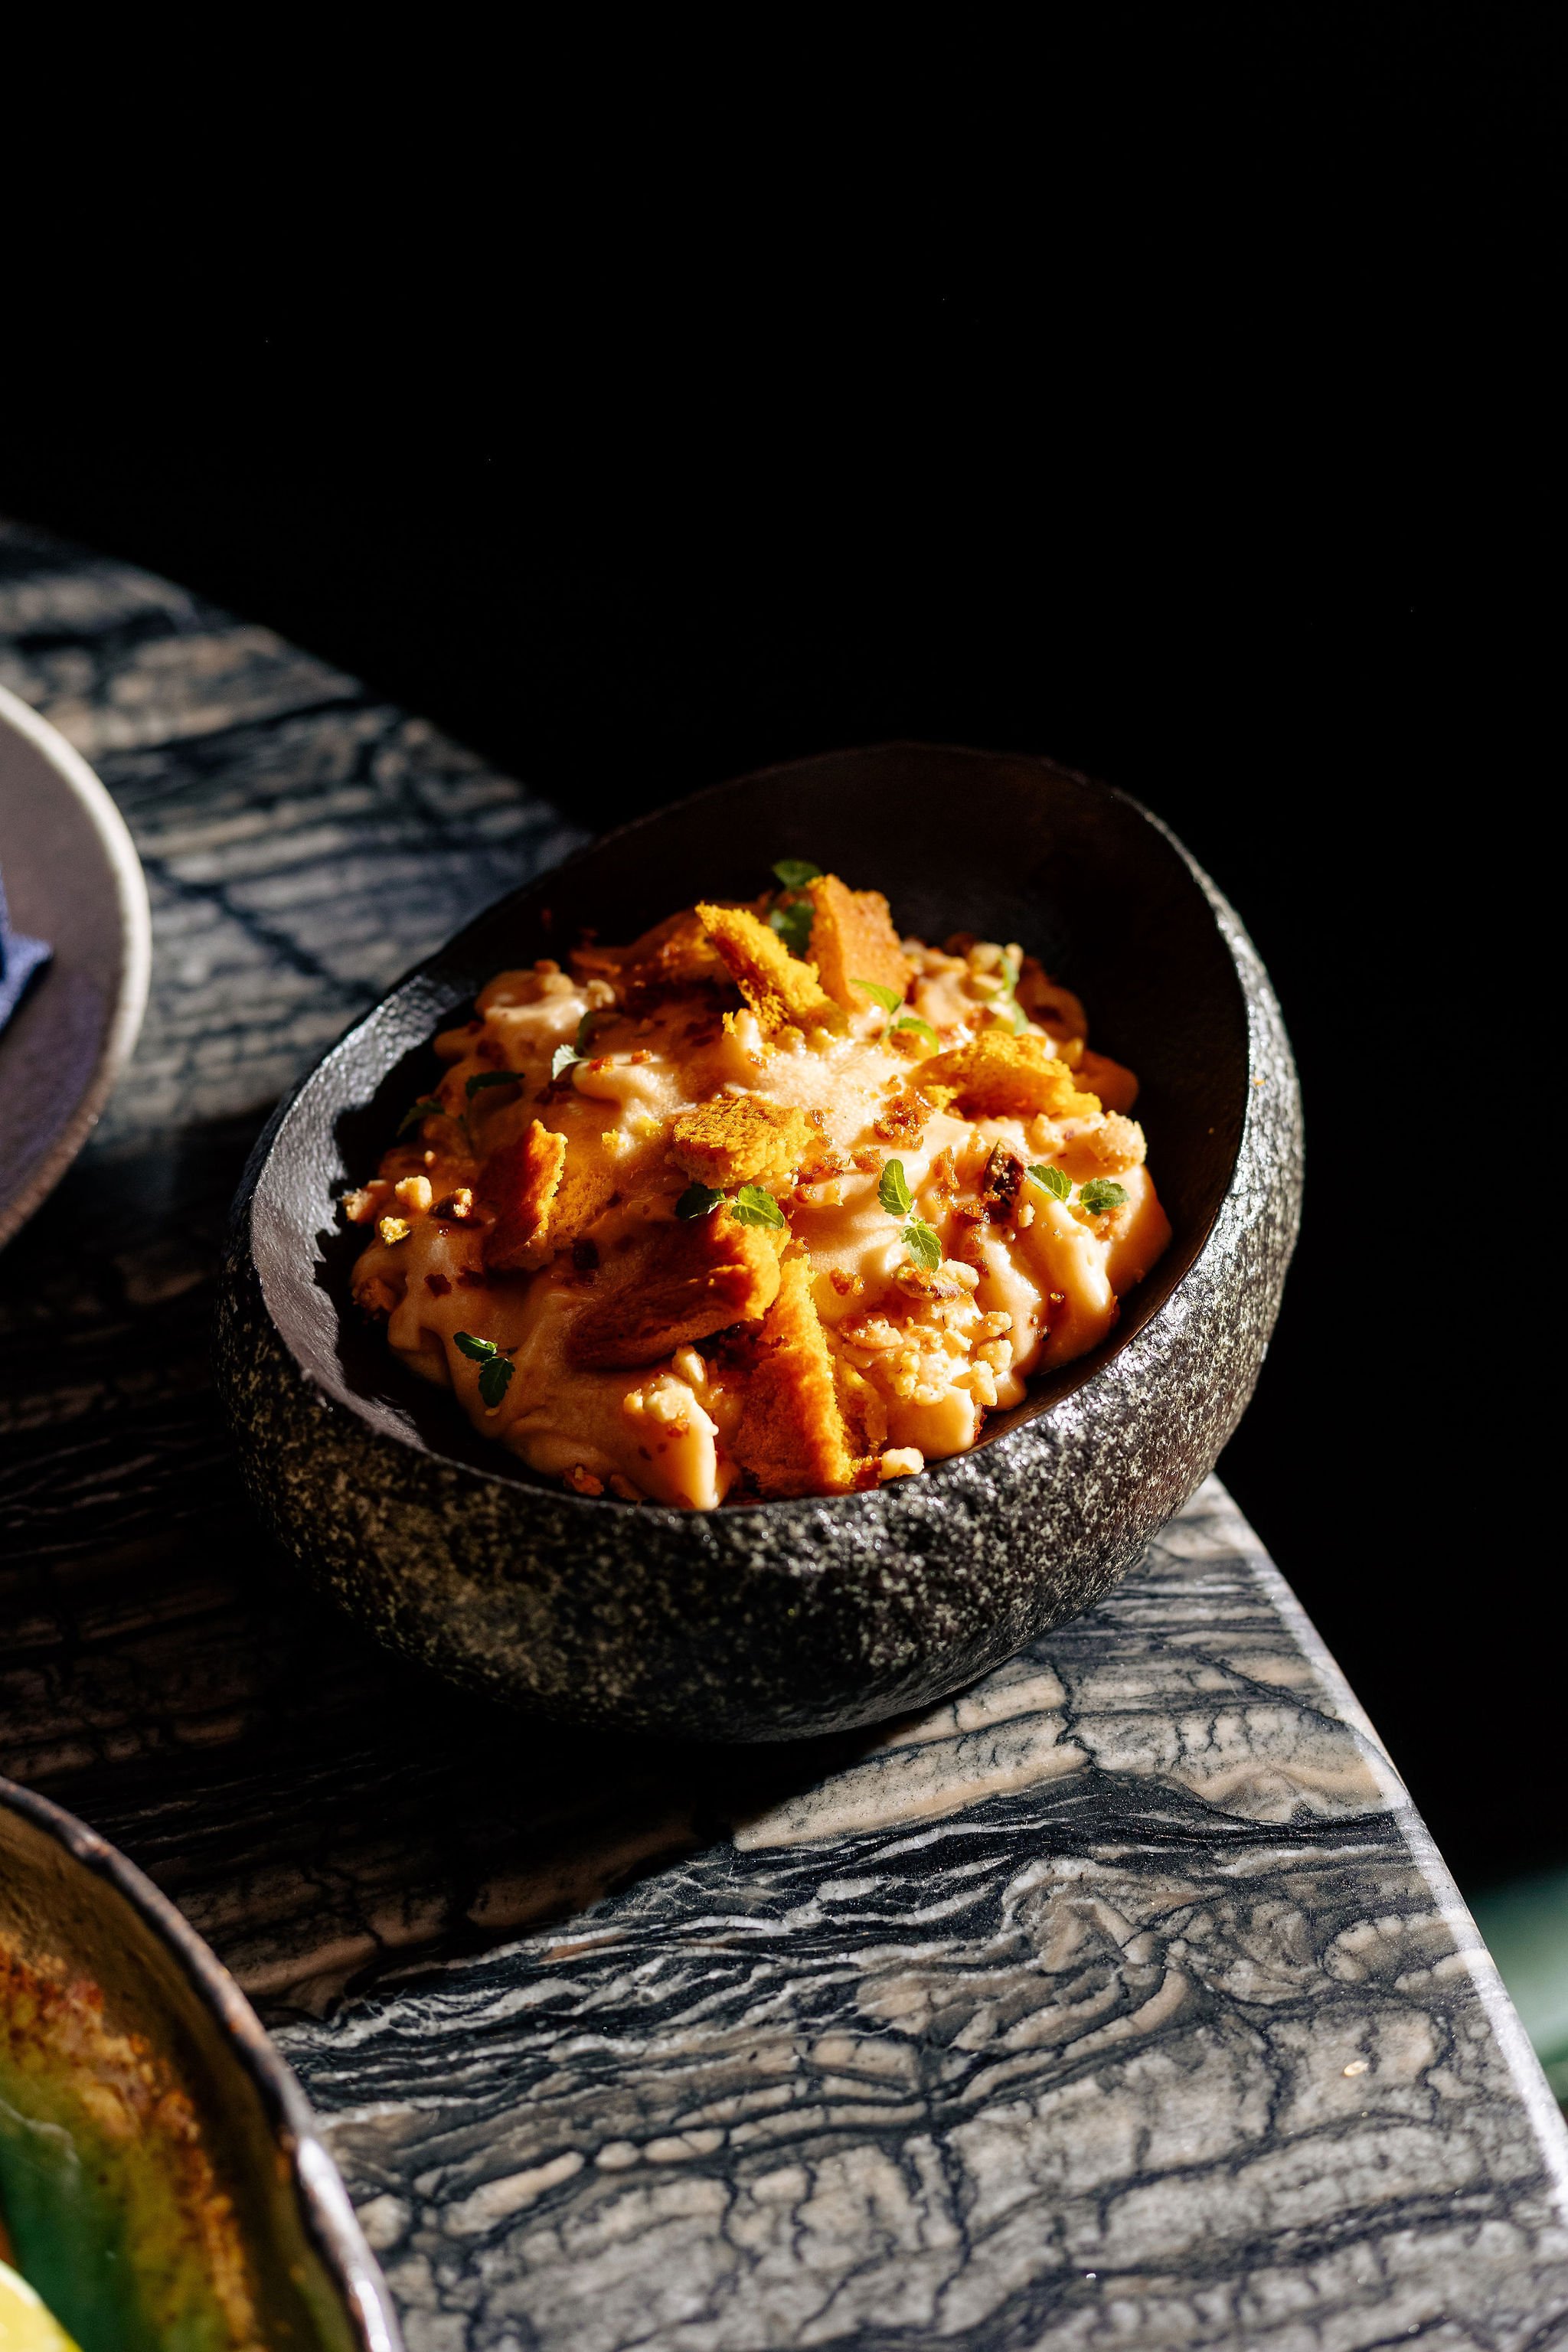 Moody photo of Japanese dish - Canberra food photographer